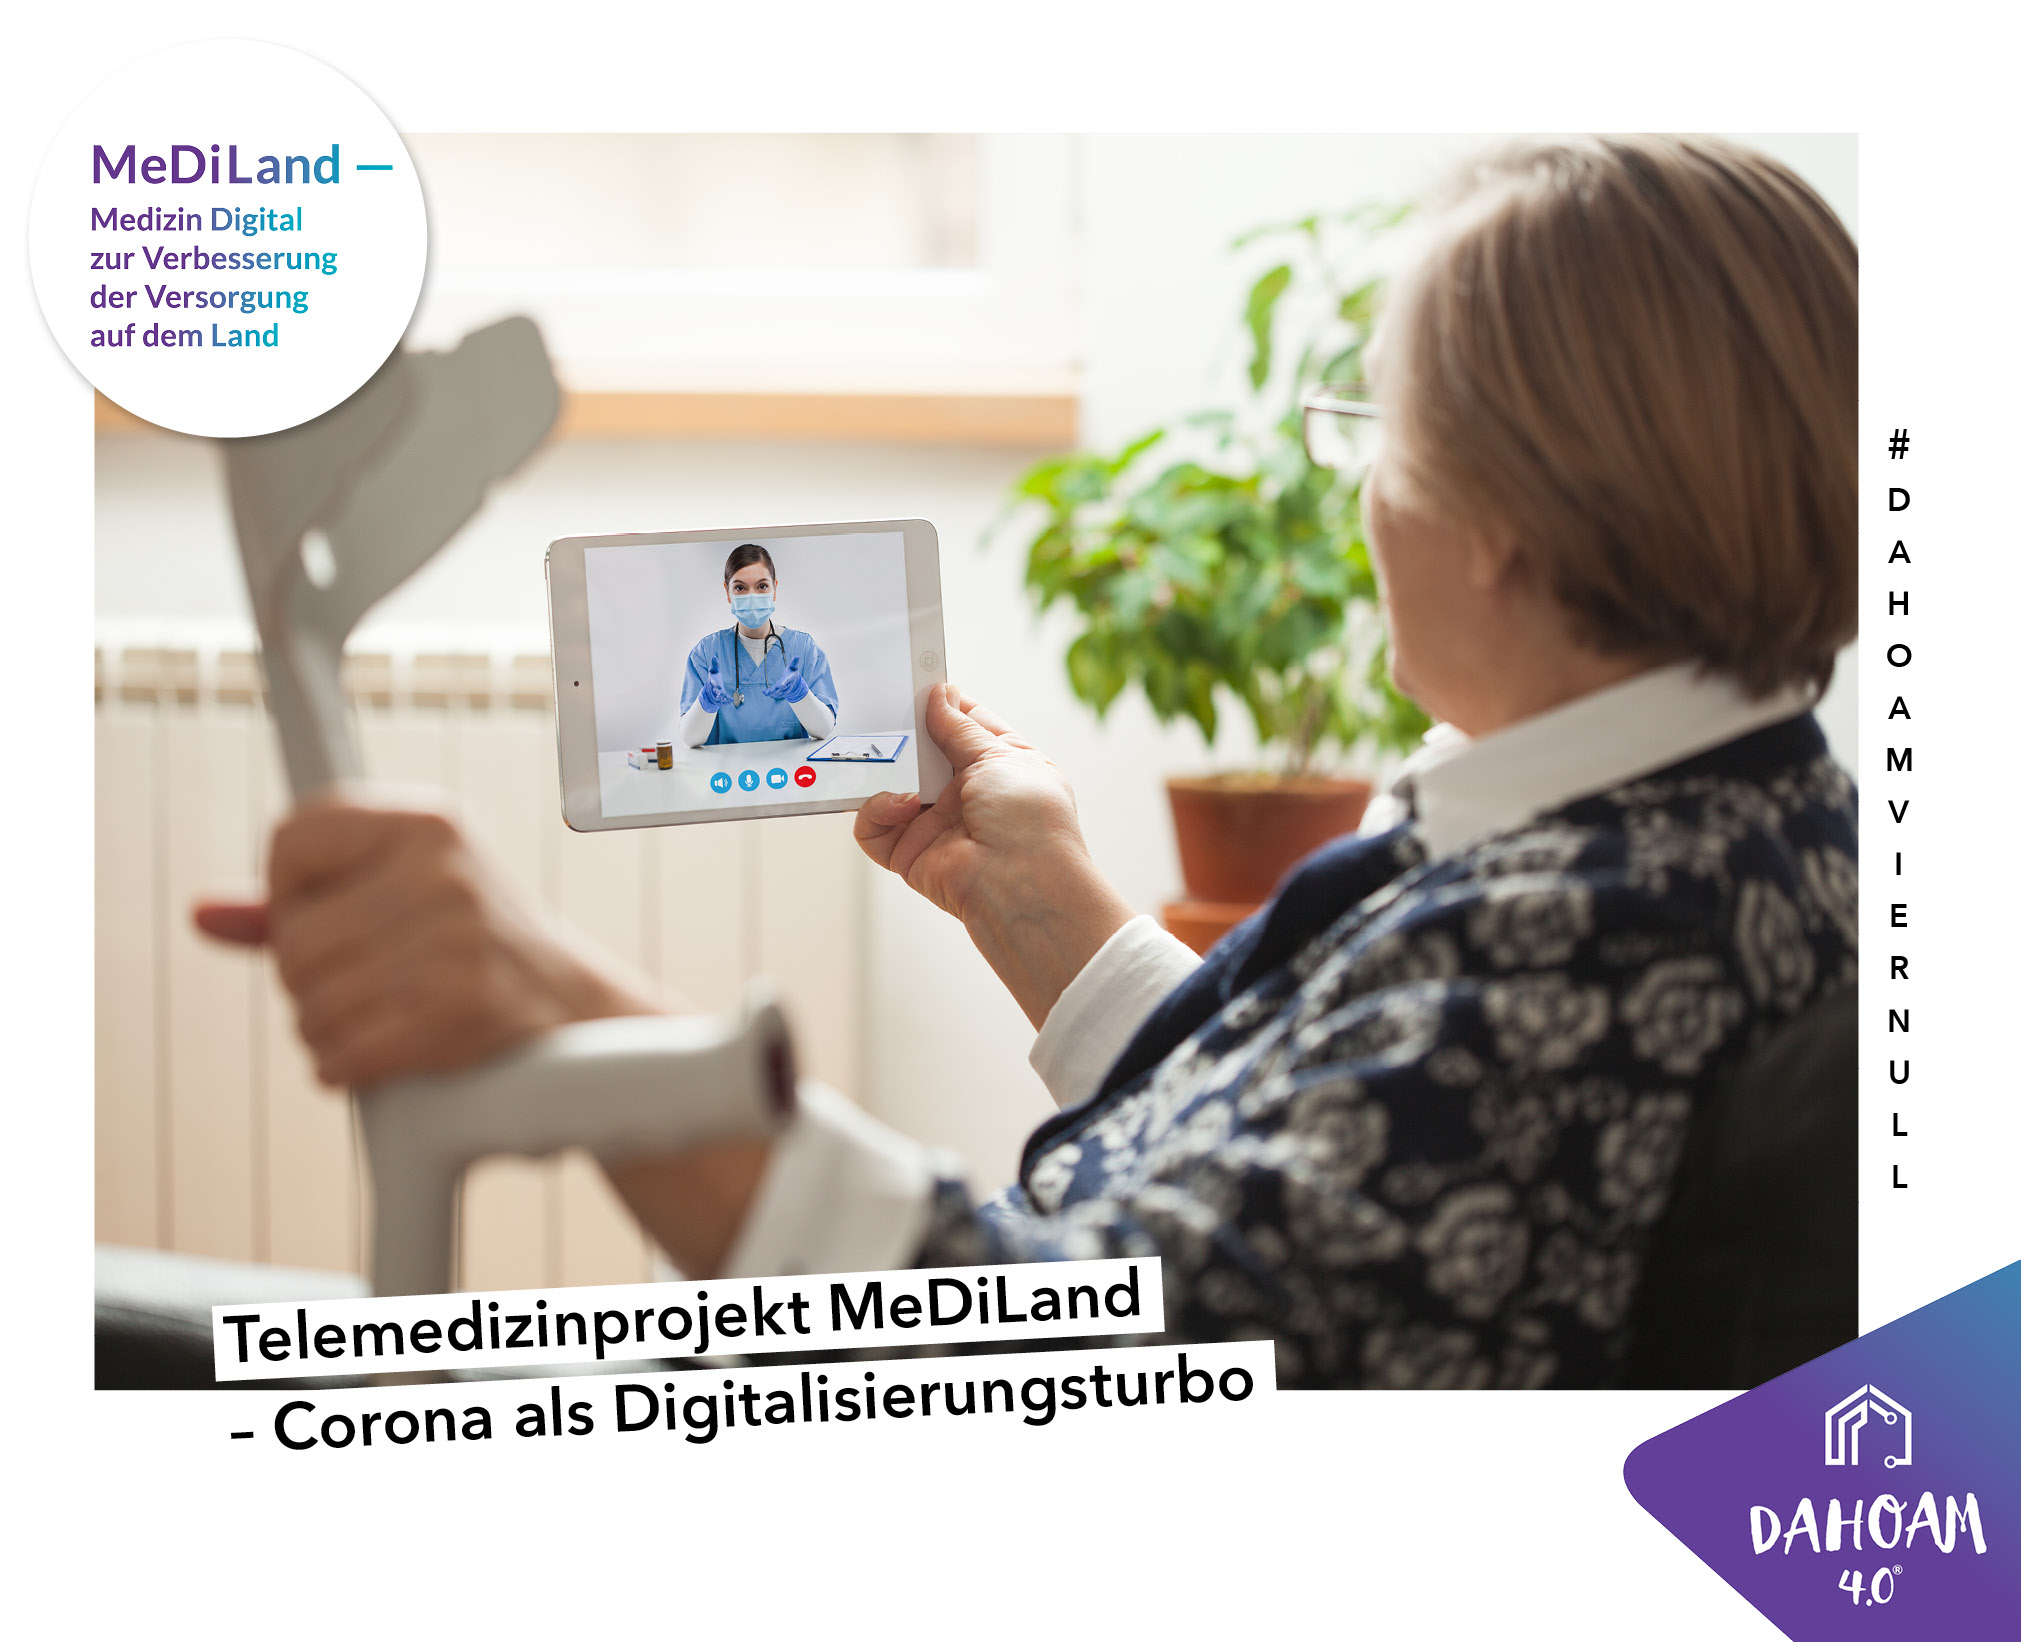 Telemedizinprojekt MeDiLand – Corona als Digitalisierungsturbo